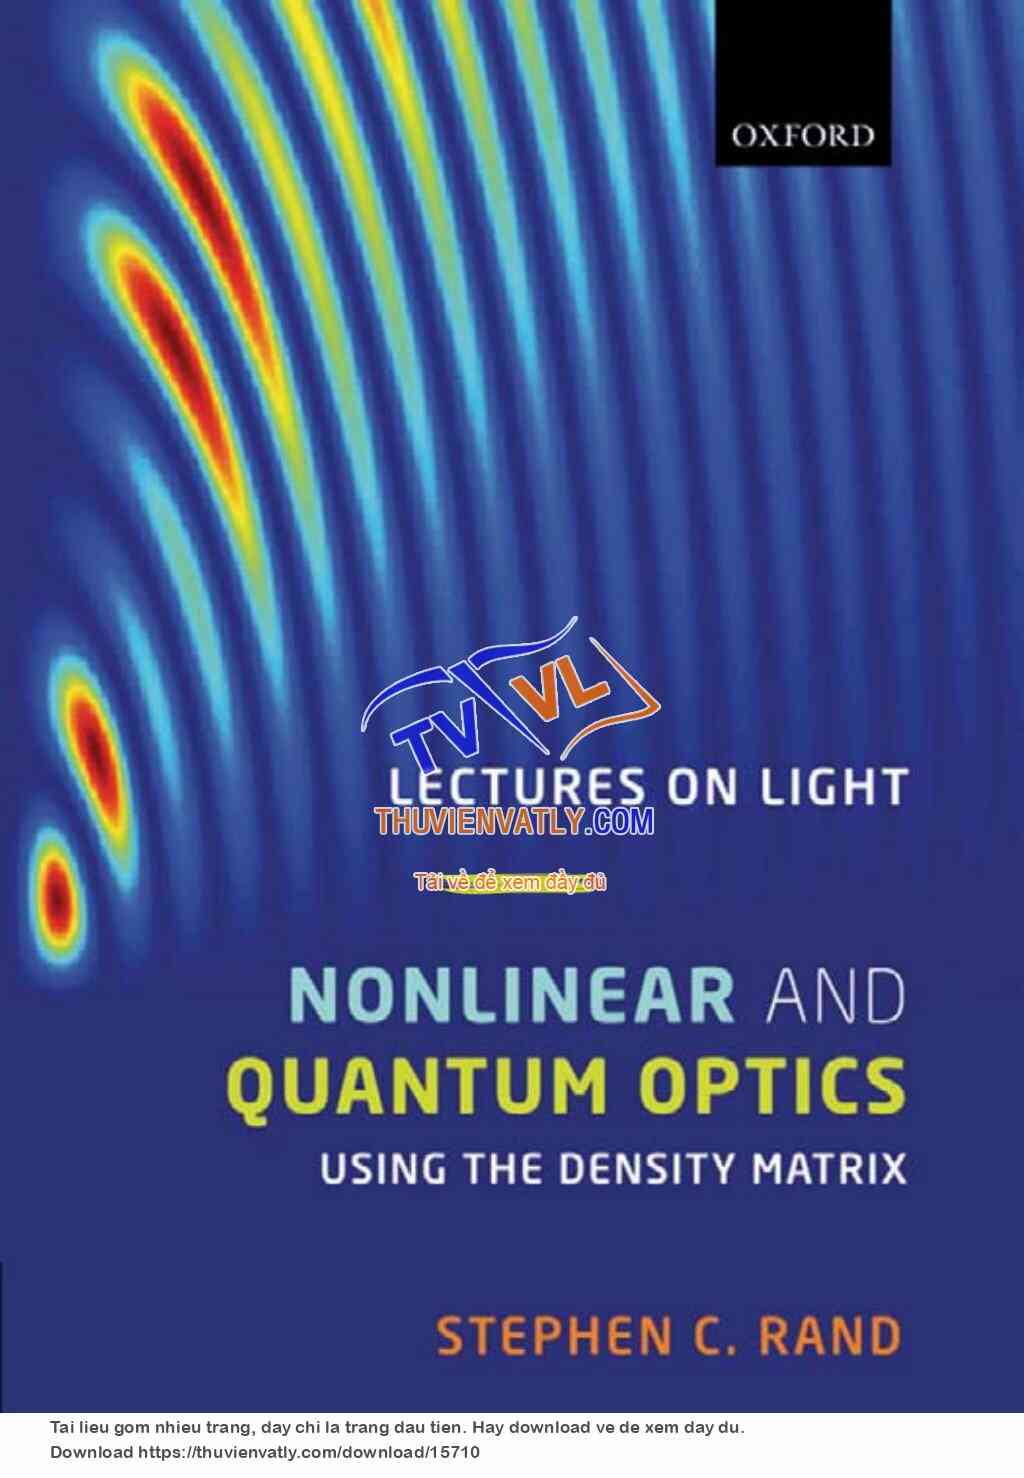 Nonlinear and Quantum Optics using the Density Matrix